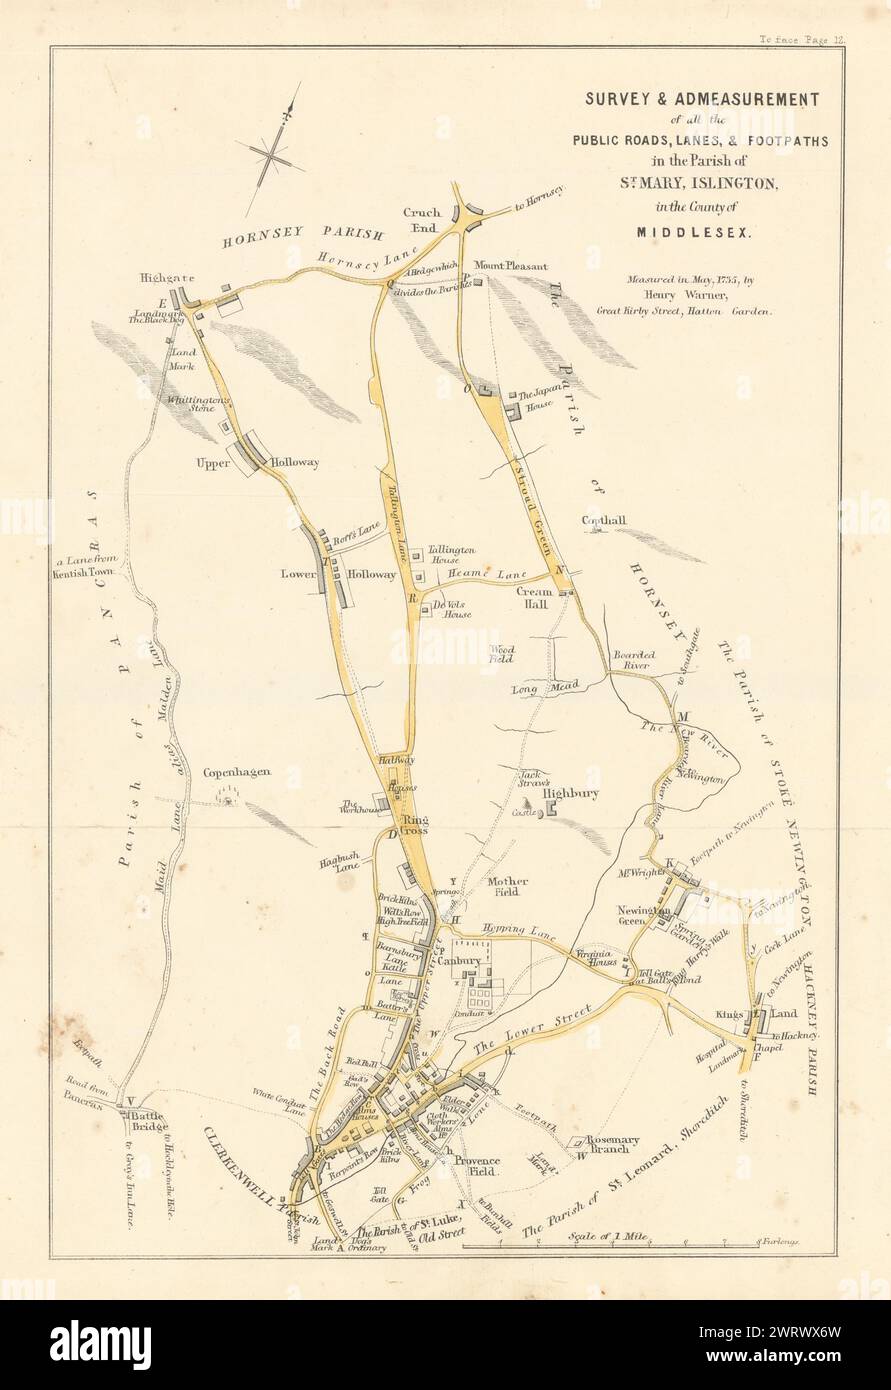 Survey & Admeasurement of… the Parish of St. Mary, Islington 1735 (1858) map Stock Photo